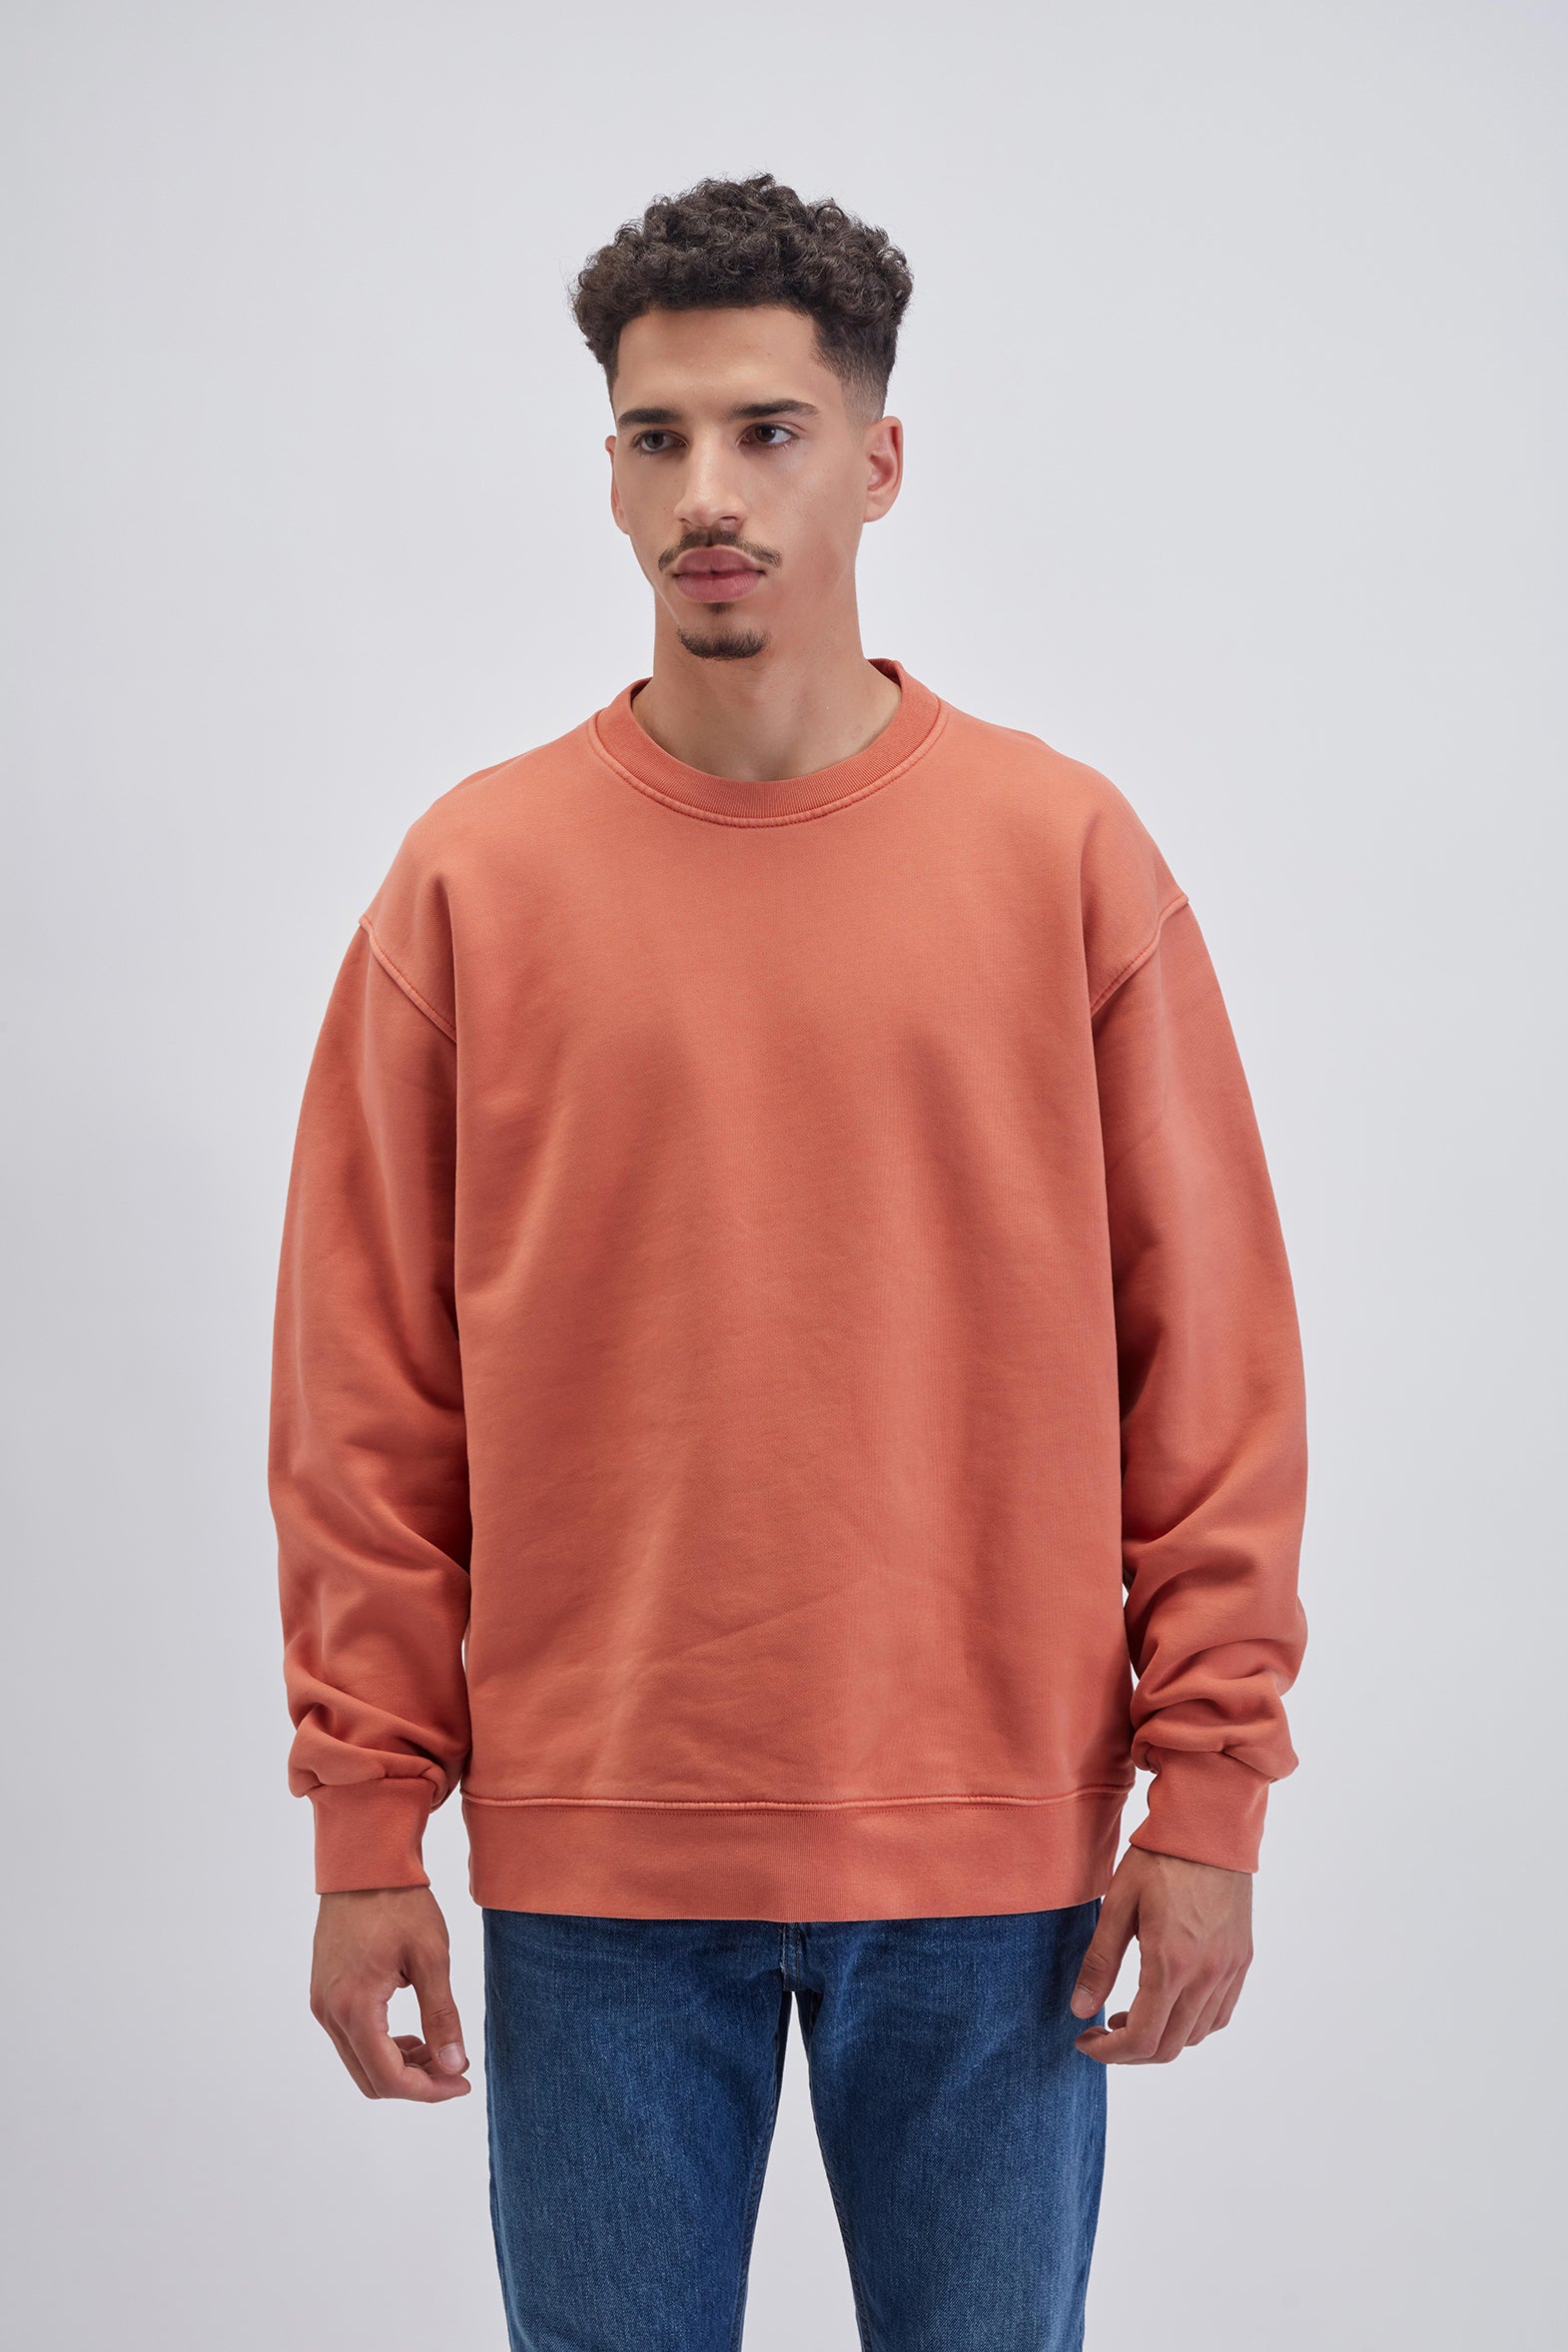 450/107 - Premium Men's Brushed Sweatshirt – Calvi wholesale